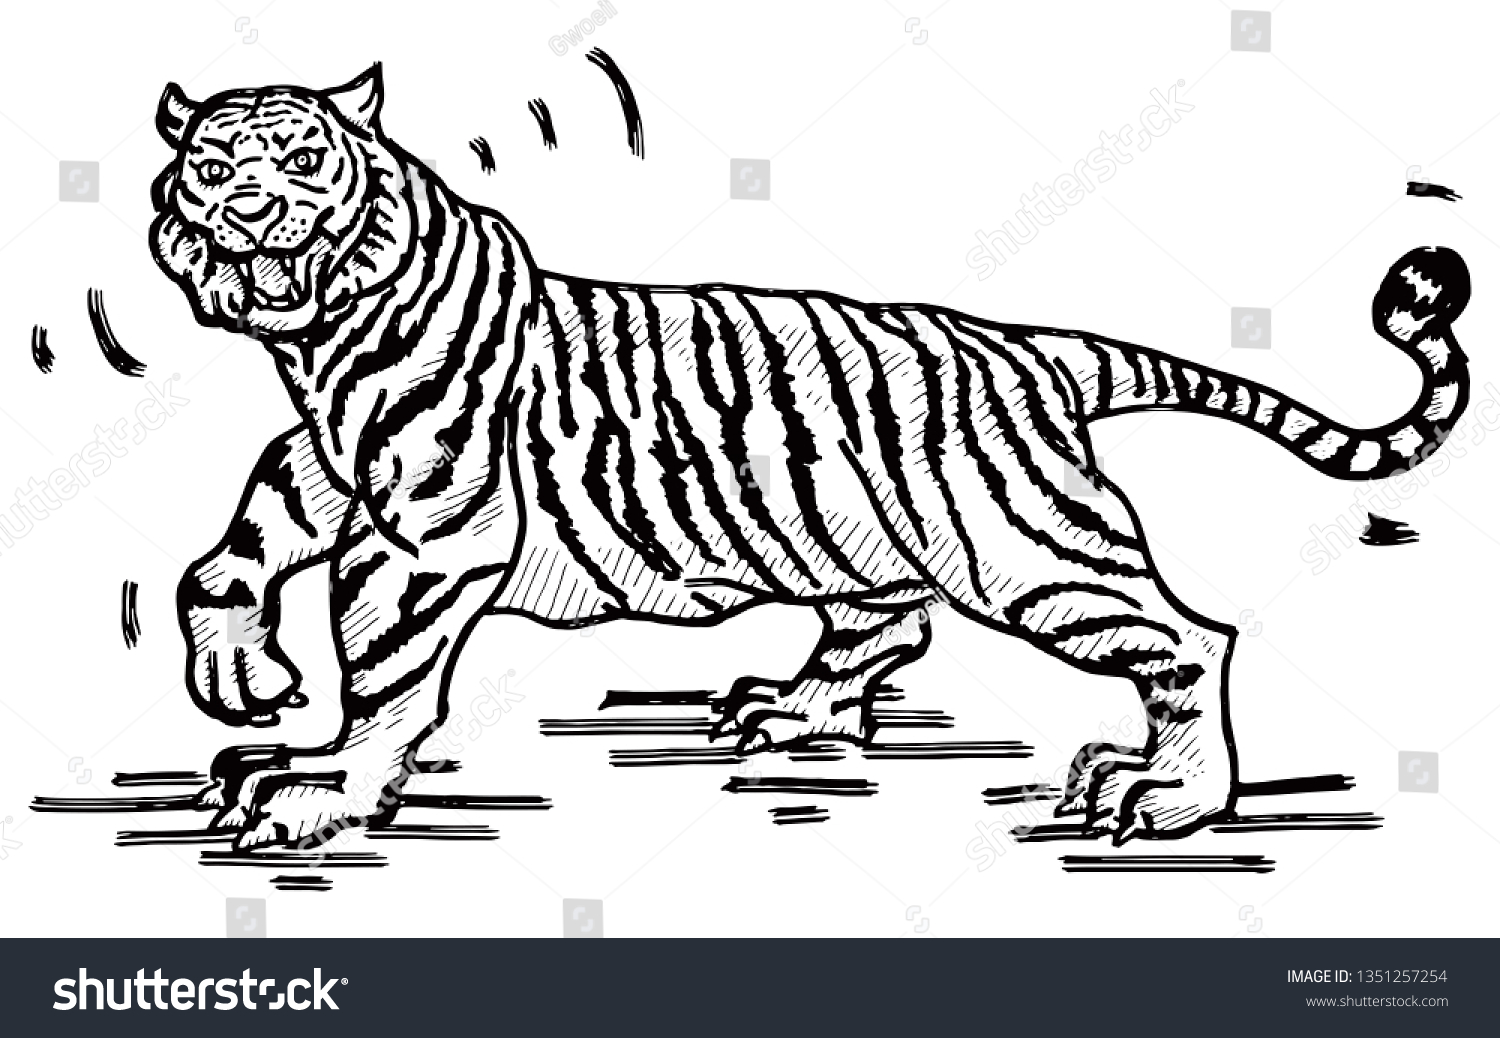 Roaring Tiger Hand Drawn Vector Illustration Stock Vector (Royalty Free ...